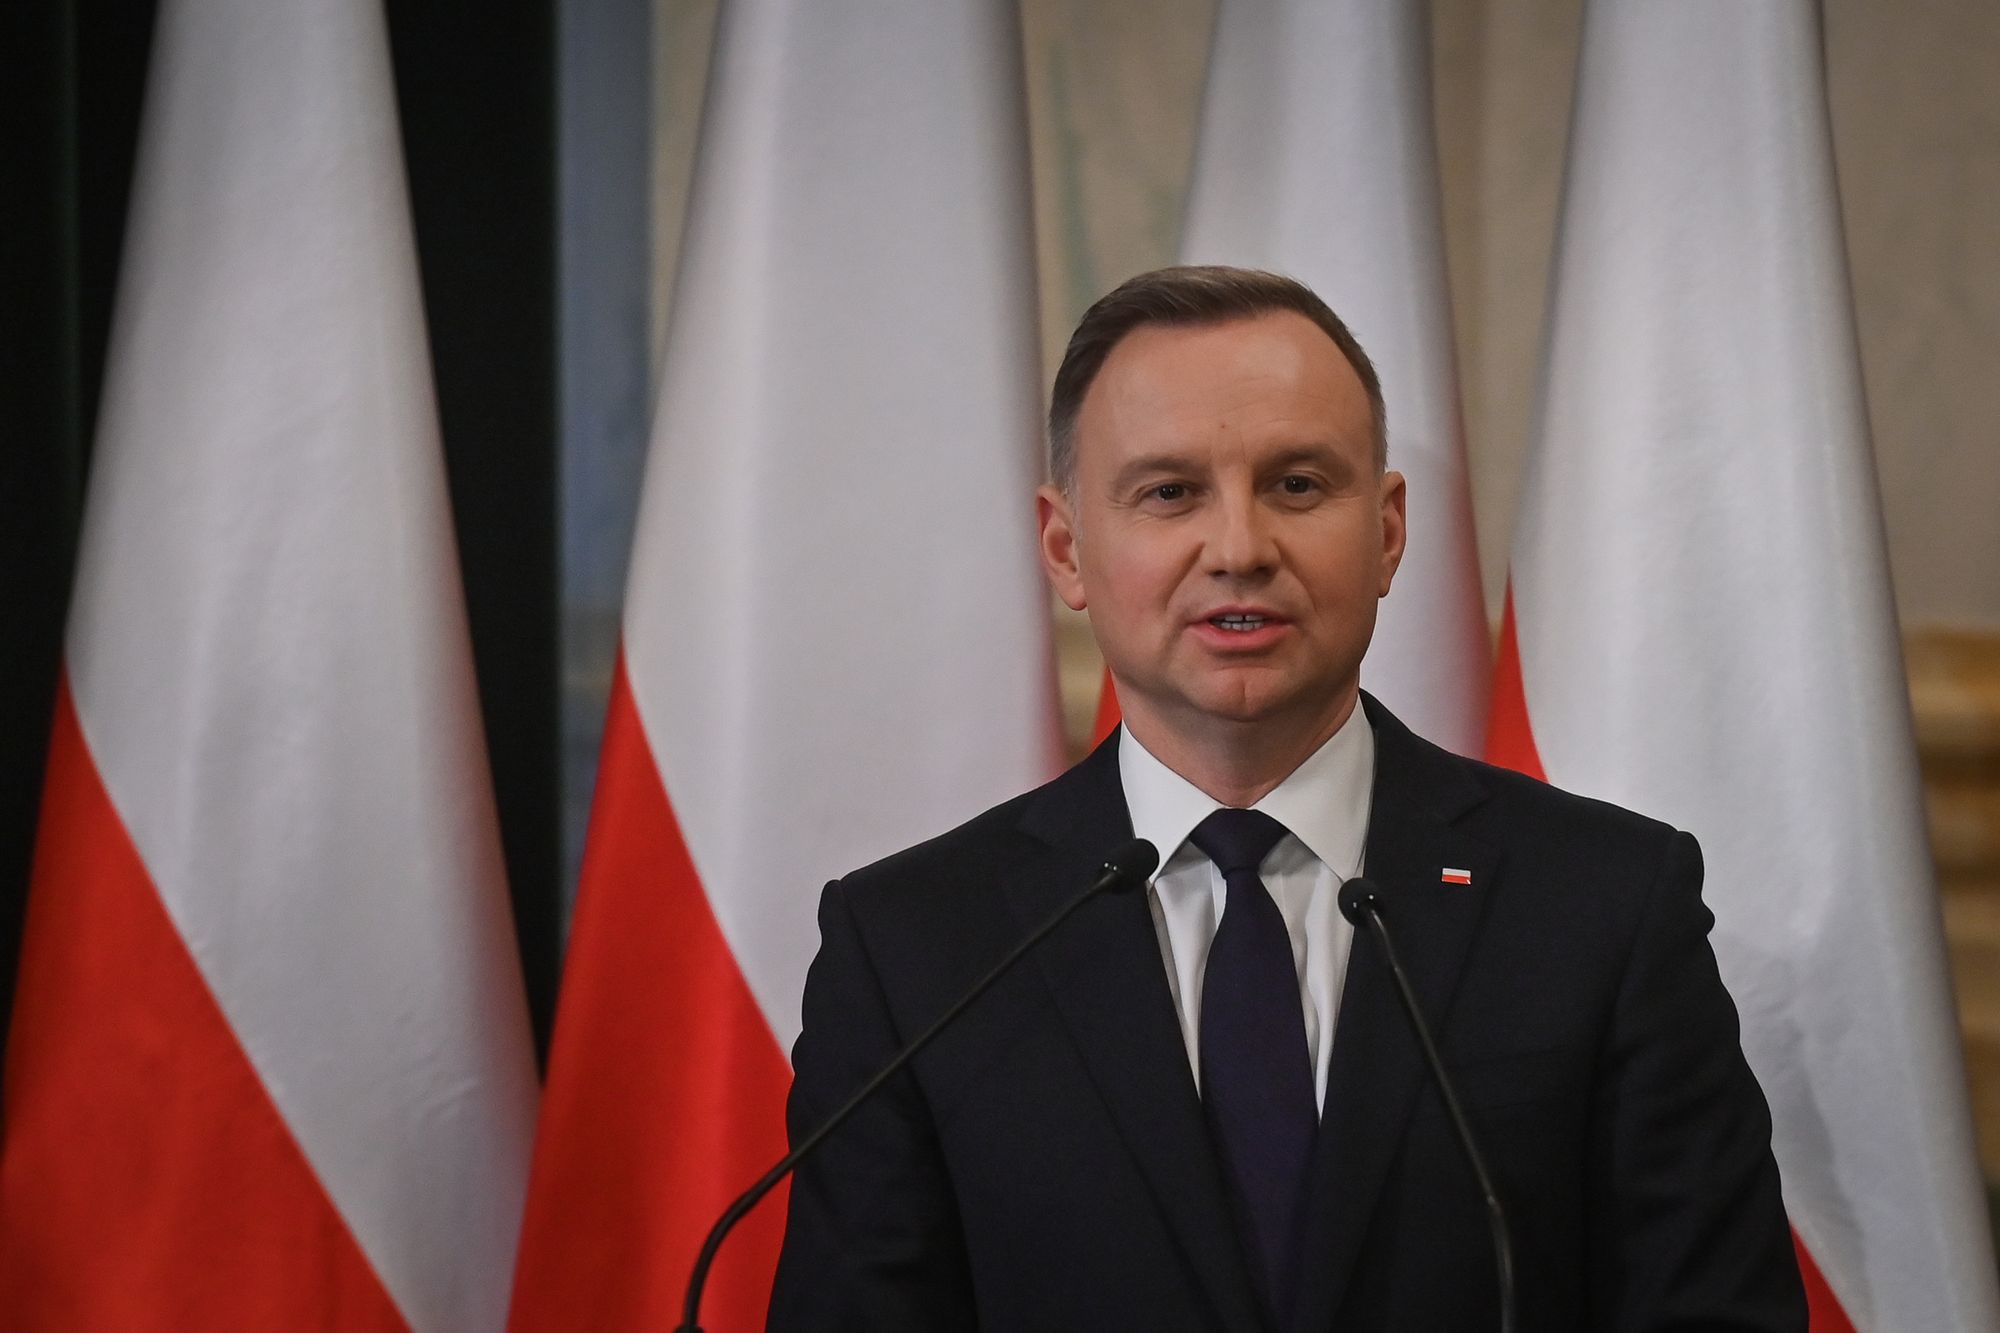 Duda: Polish EU presidency to focus on Ukraine's integration as one of key priorities